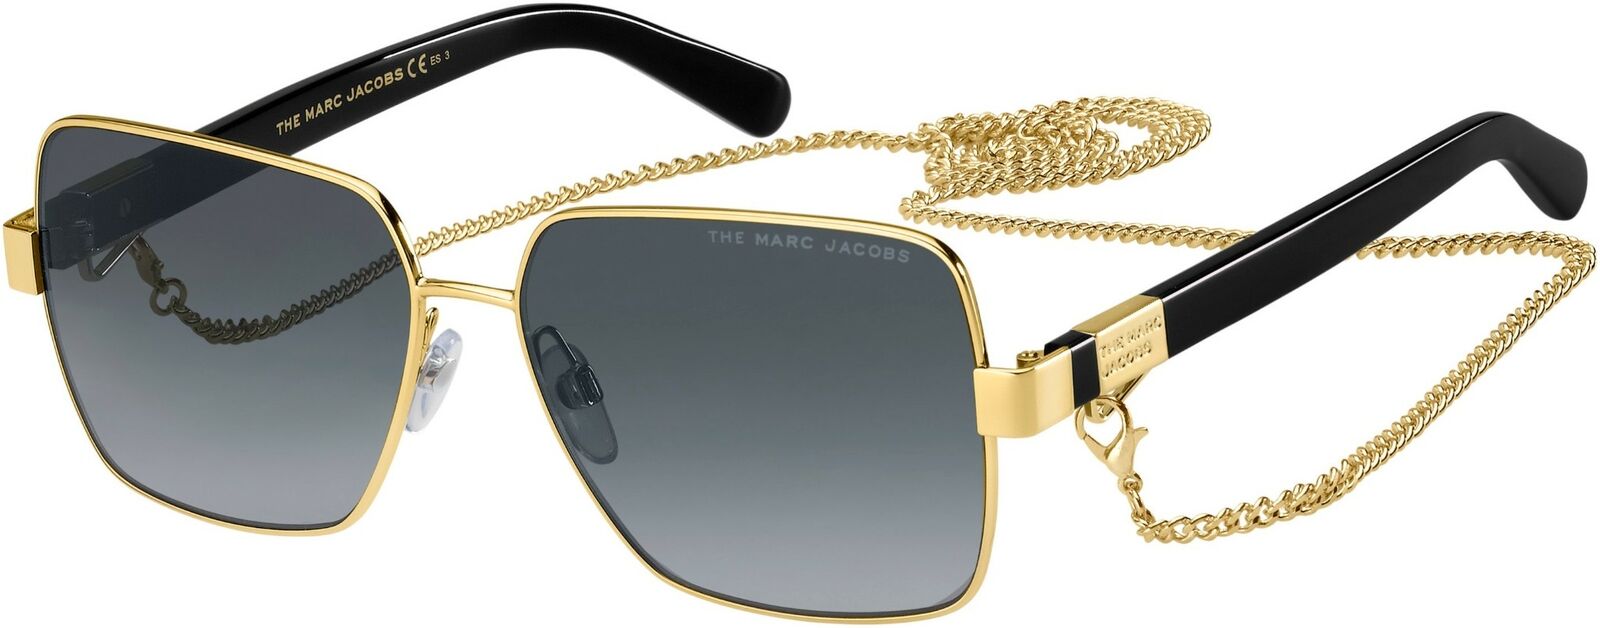 Marc Jacobs Marc 495/S 0J5G/9O Gold/Dark Gray Gradient Sunglasses